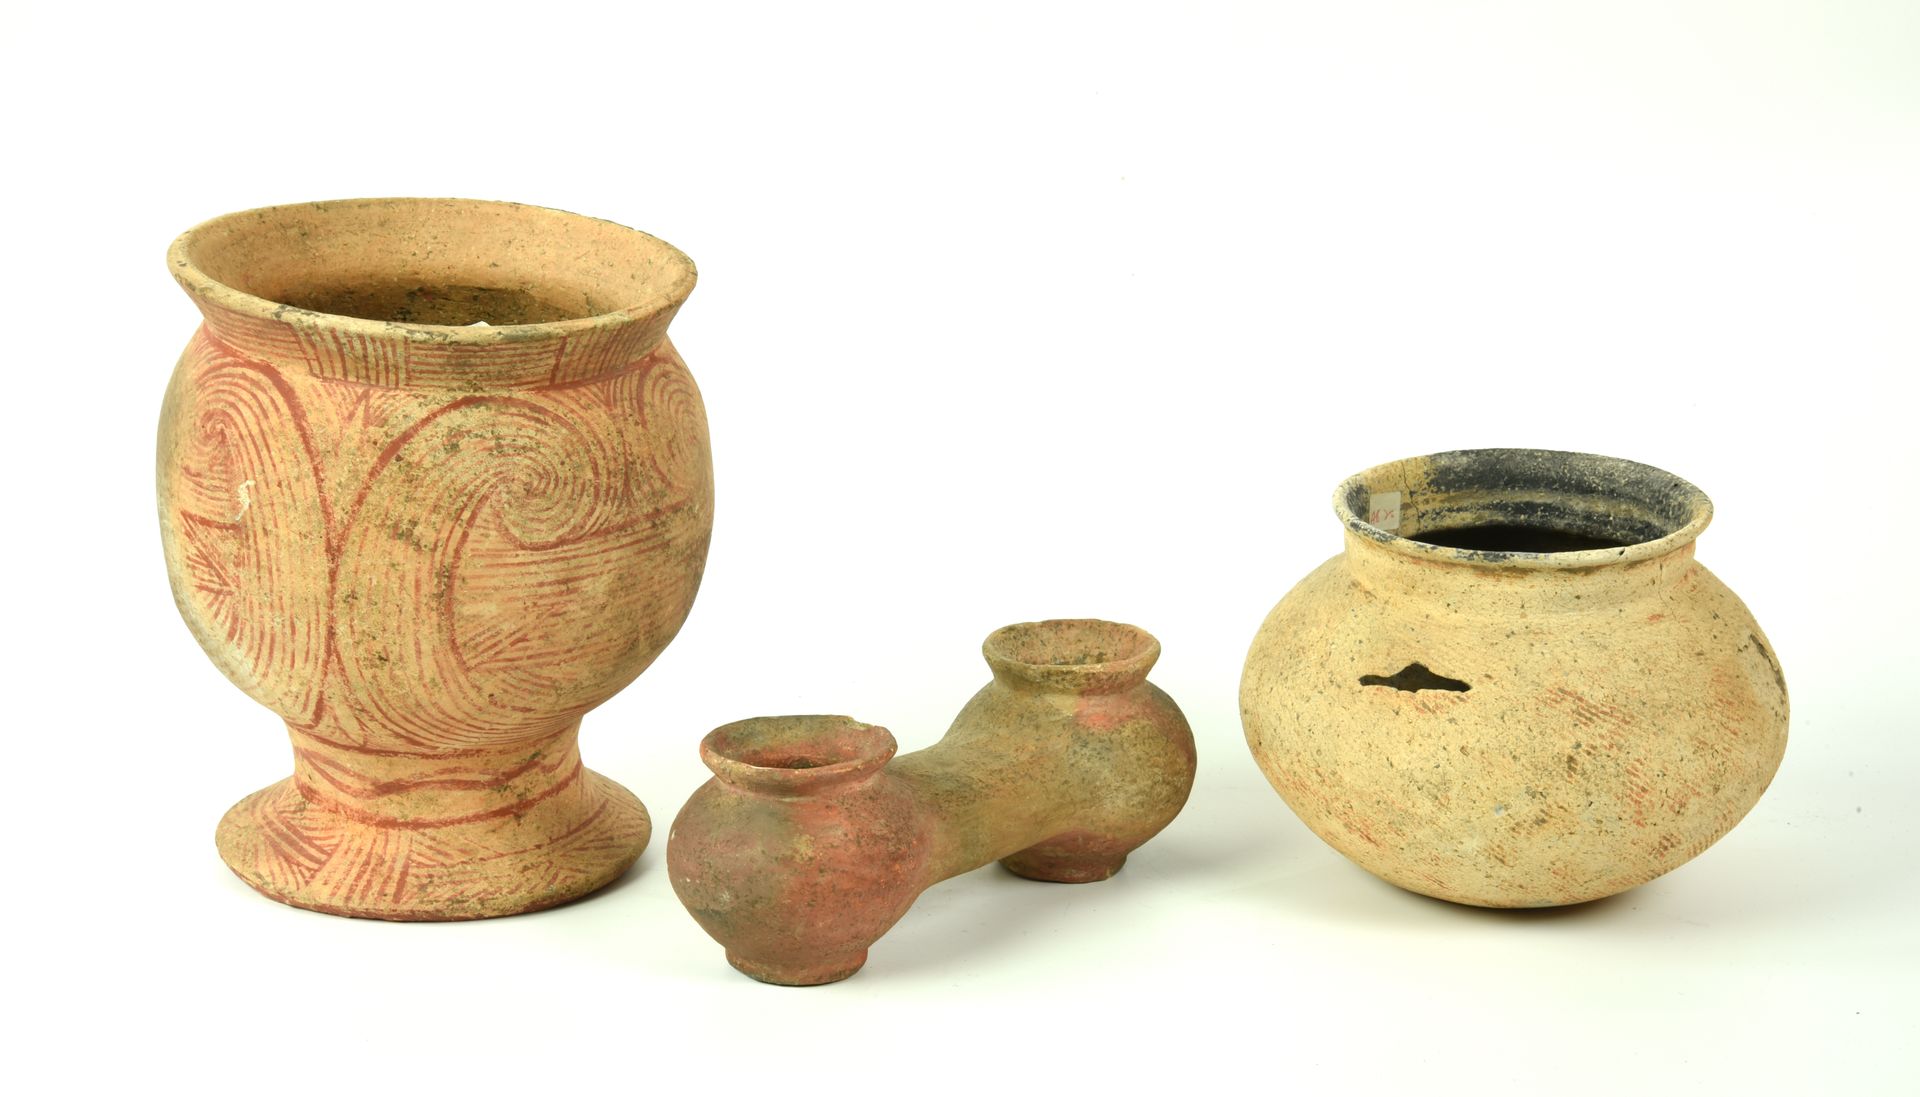 Null 三个邦强花瓶

日期：公元前600-300年。

材料和技术：棕色纯化粘土，白色斑纹，红色油漆，用慢速车床造型。

喇叭形宽底的花瓶，球状的瓶身和喇叭&hellip;